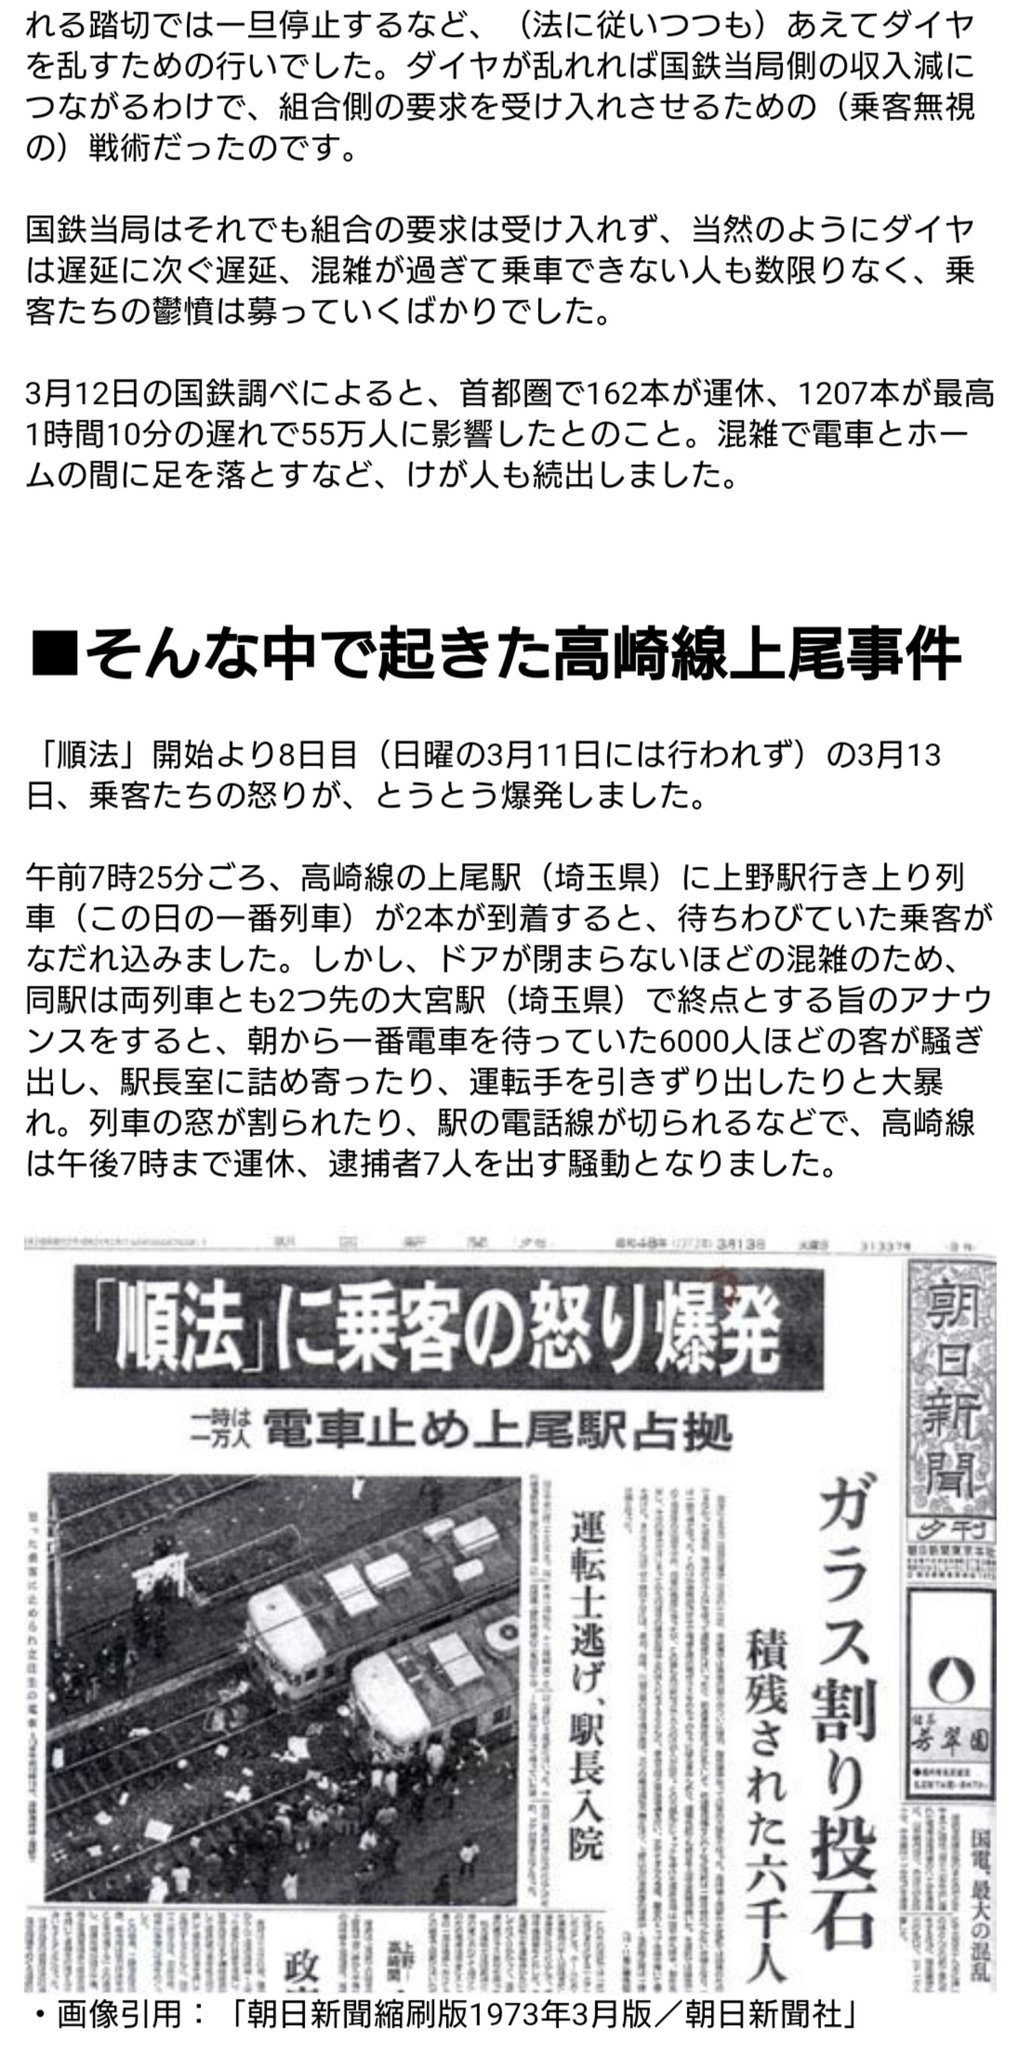 wl16/国鉄の空襲被害記録 日本国有鉄道施設局・監修、国鉄の空襲被害 